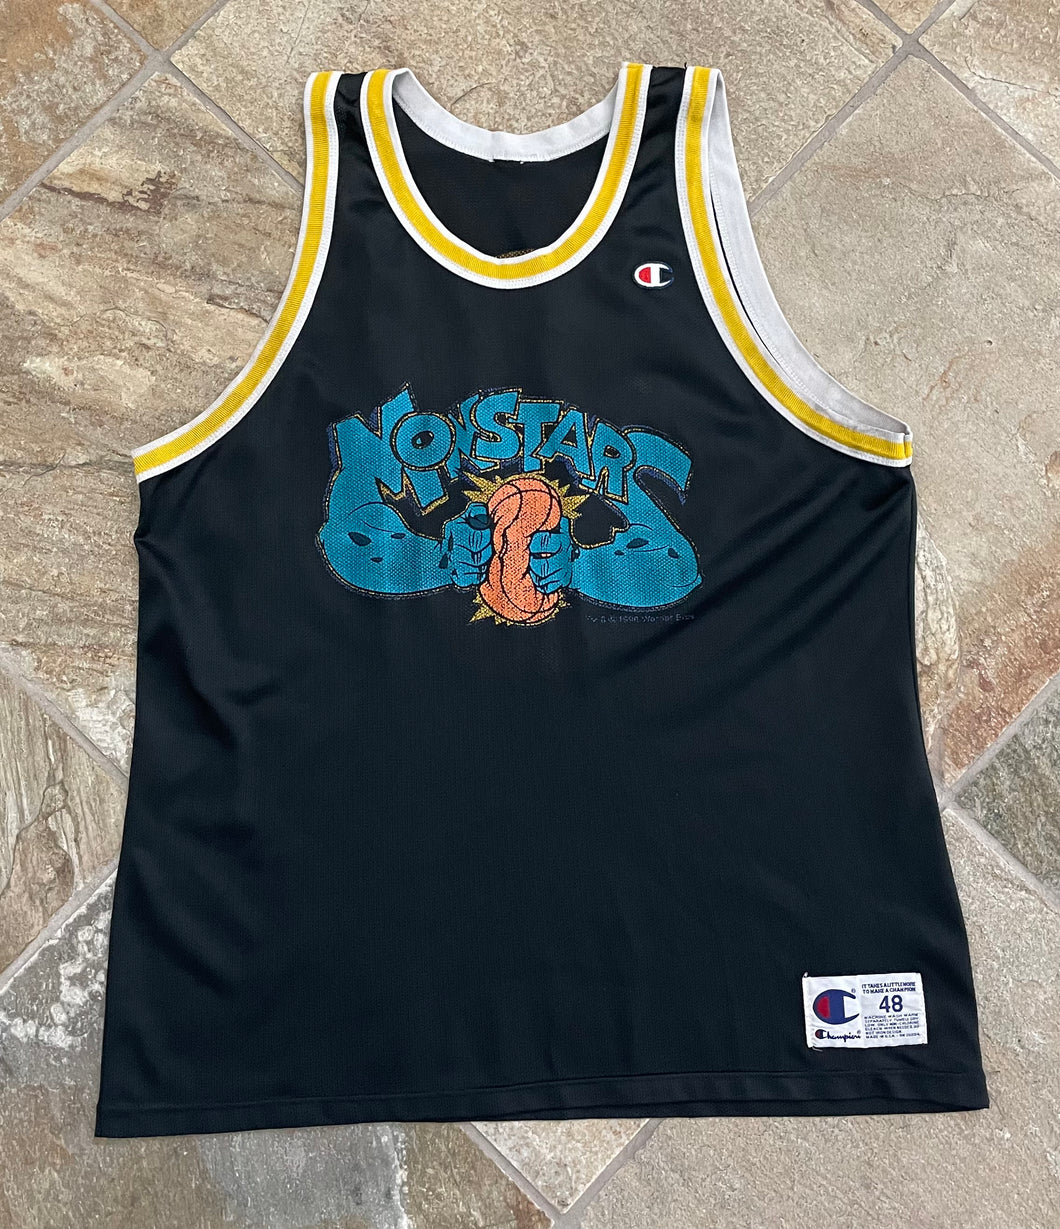 Vintage Space Jam Monstars Champion Basketball Jersey, Size 48, XL